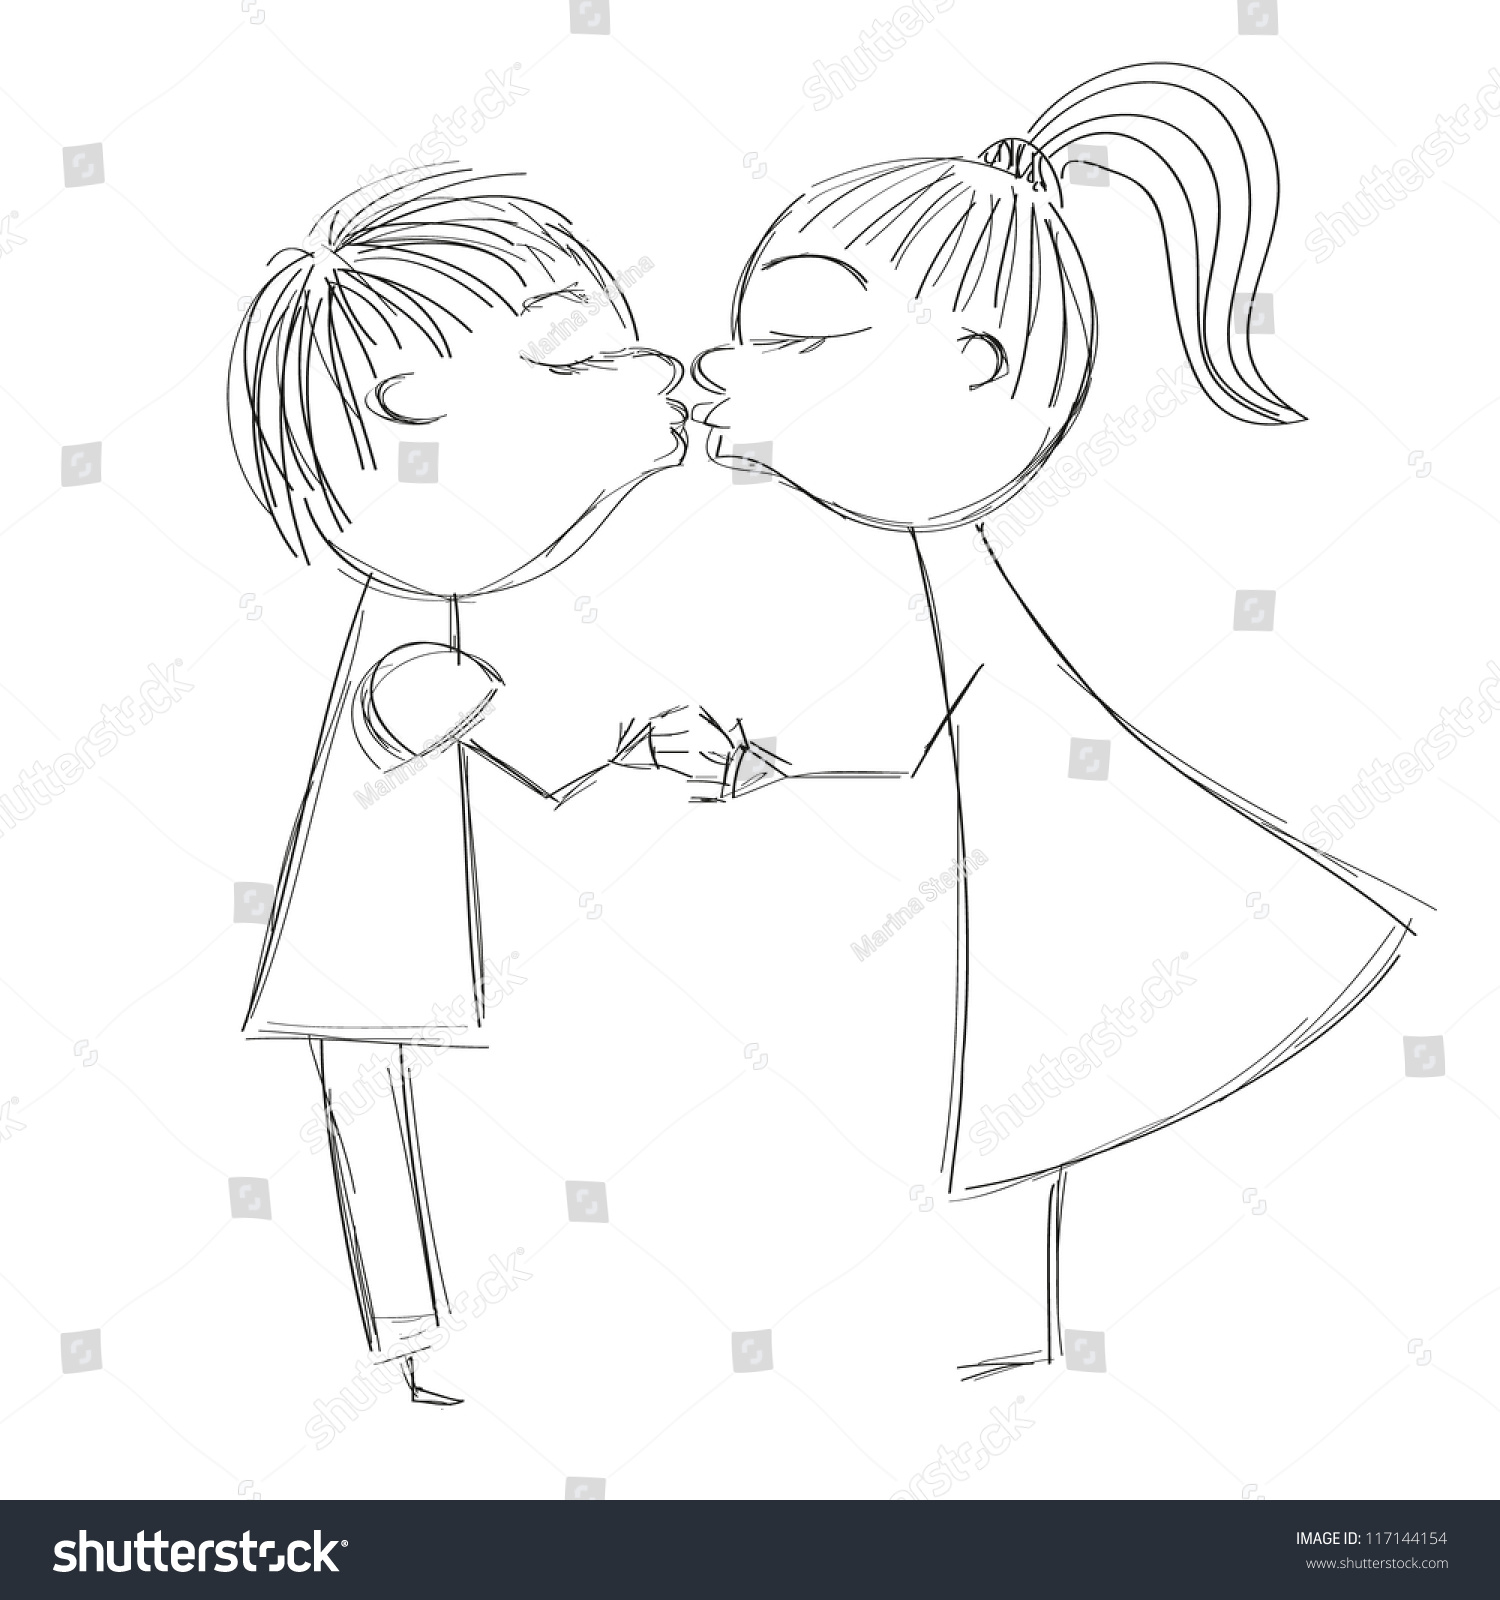 Vector Hand Drawing Illustration Of Boy And Girl Royalty Free Stock Vector Avopix Com